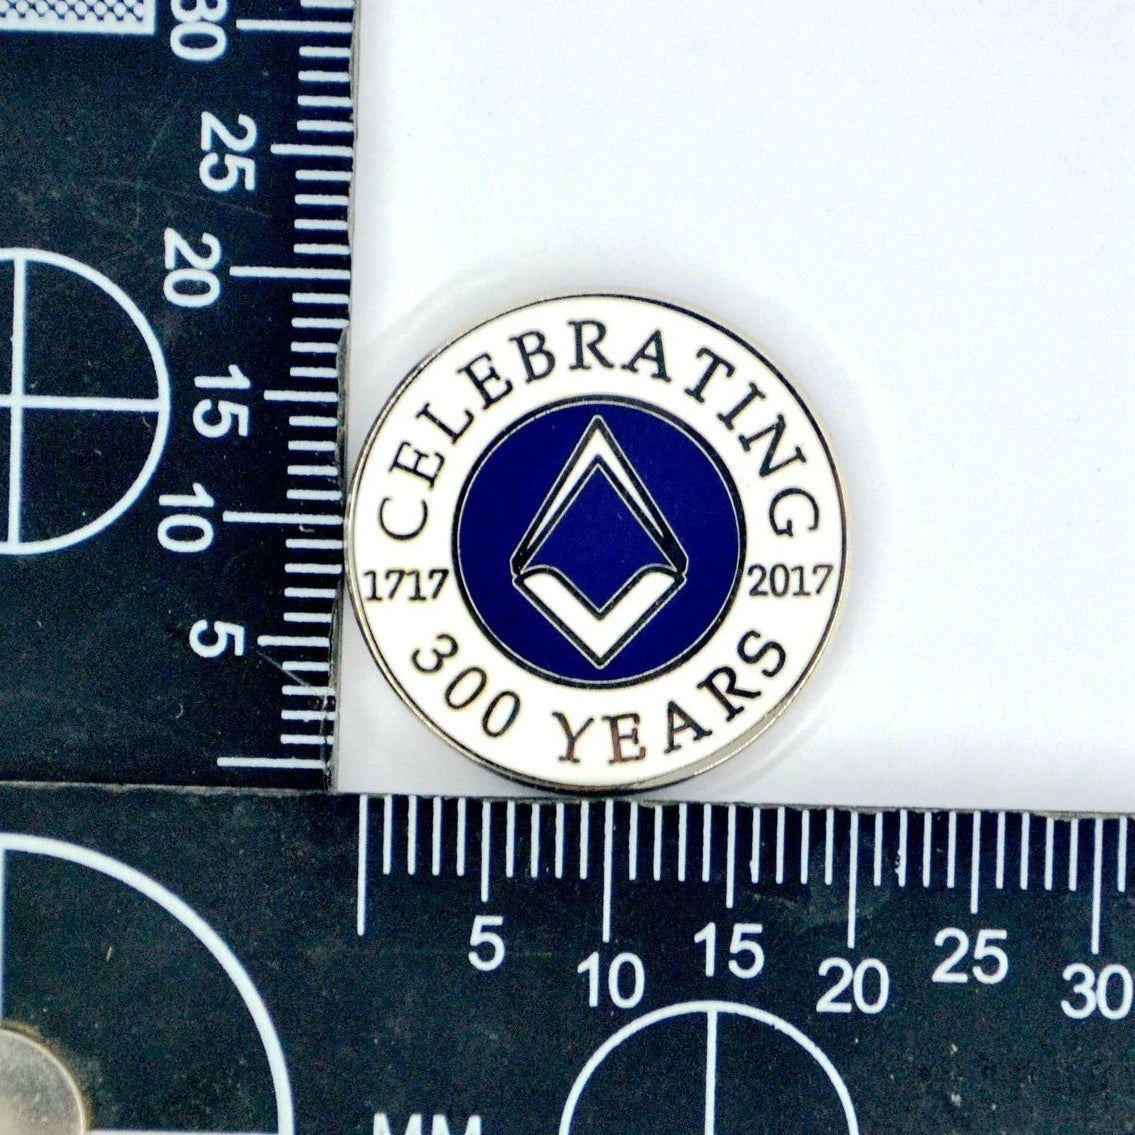 Master Mason Blue Lodge Lapel Pin - White & Blue Square And Compass 300th Anniversary Round Badge - Bricks Masons